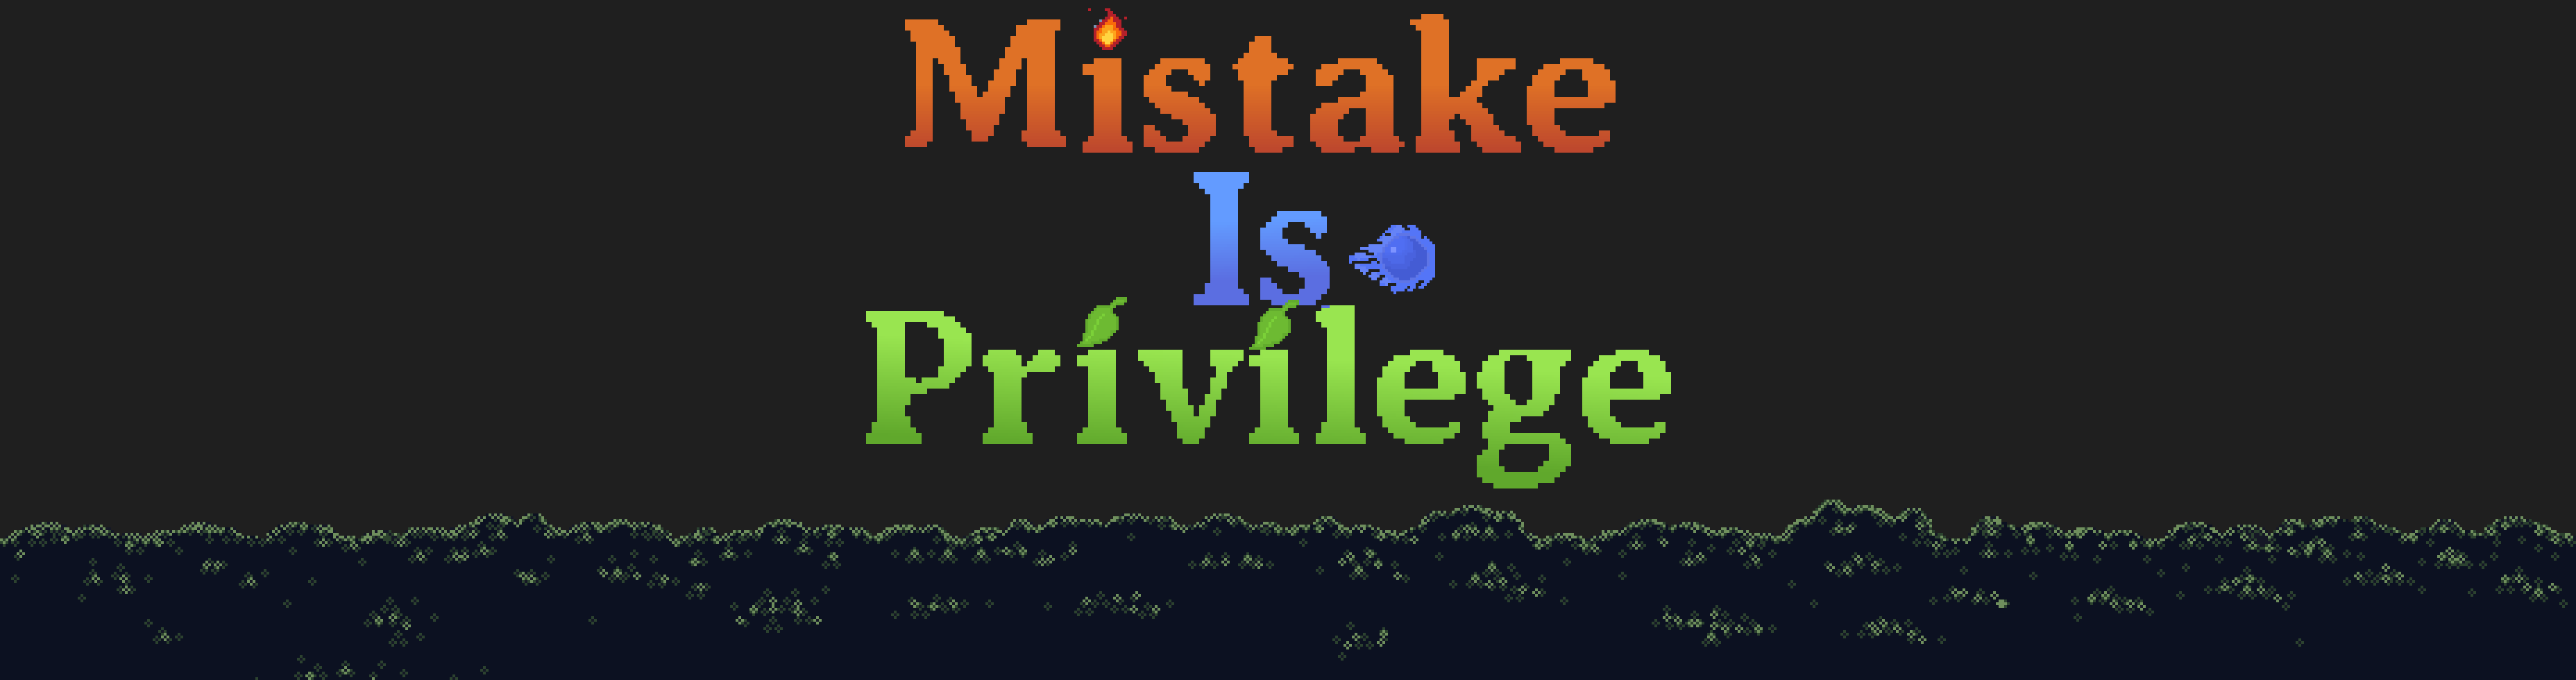 Mistake is Privilege